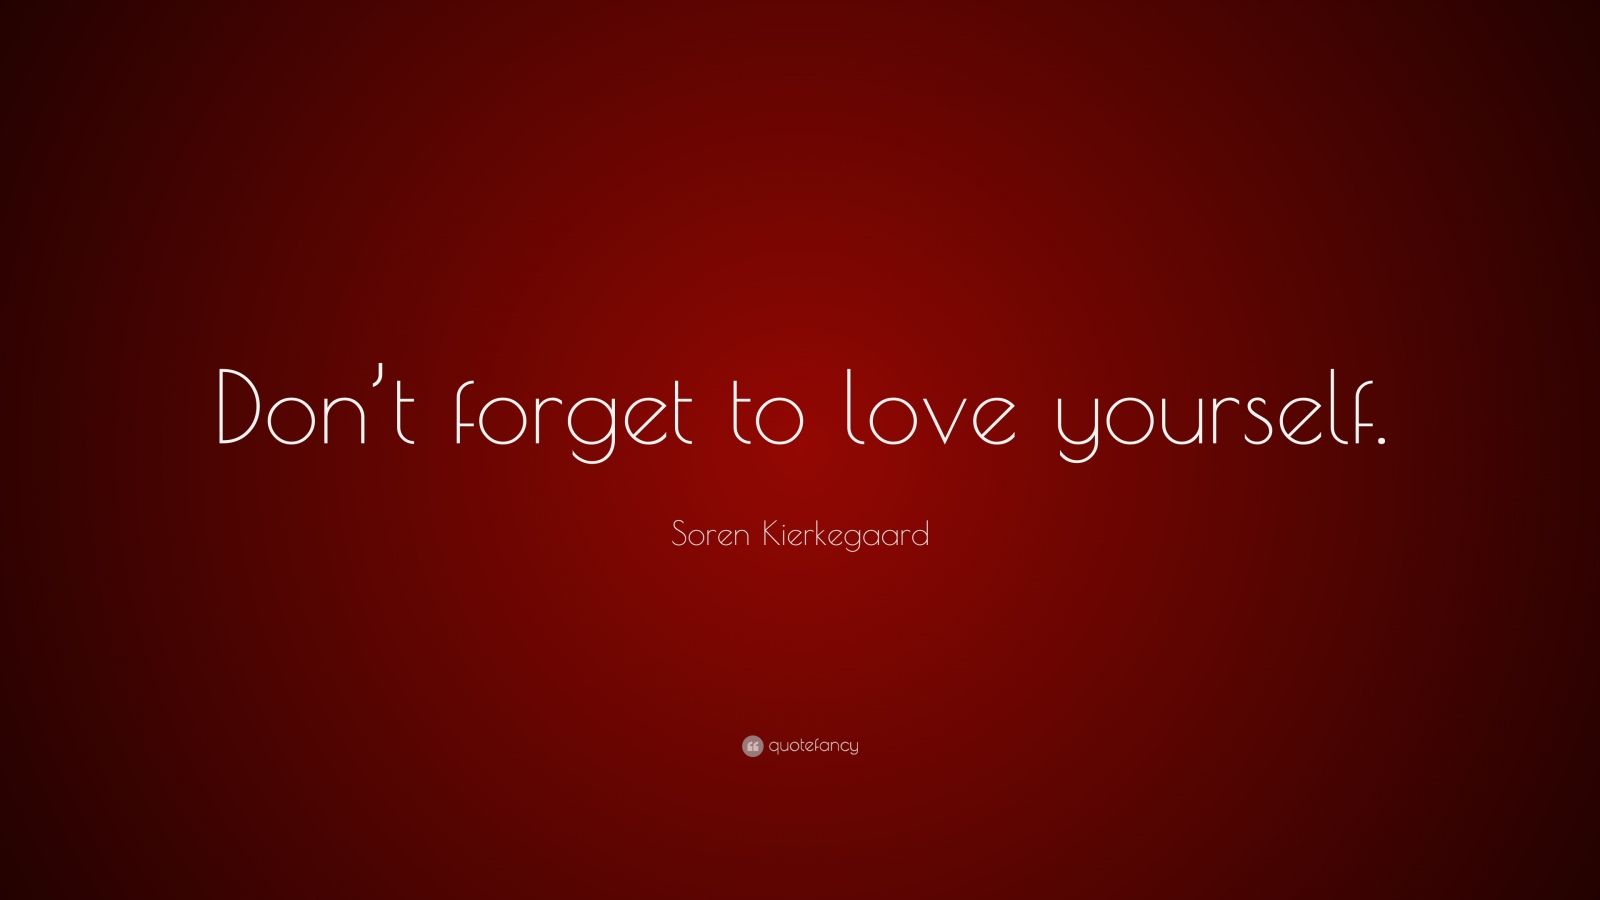 Soren Kierkegaard Quote “Don t for to love yourself ”